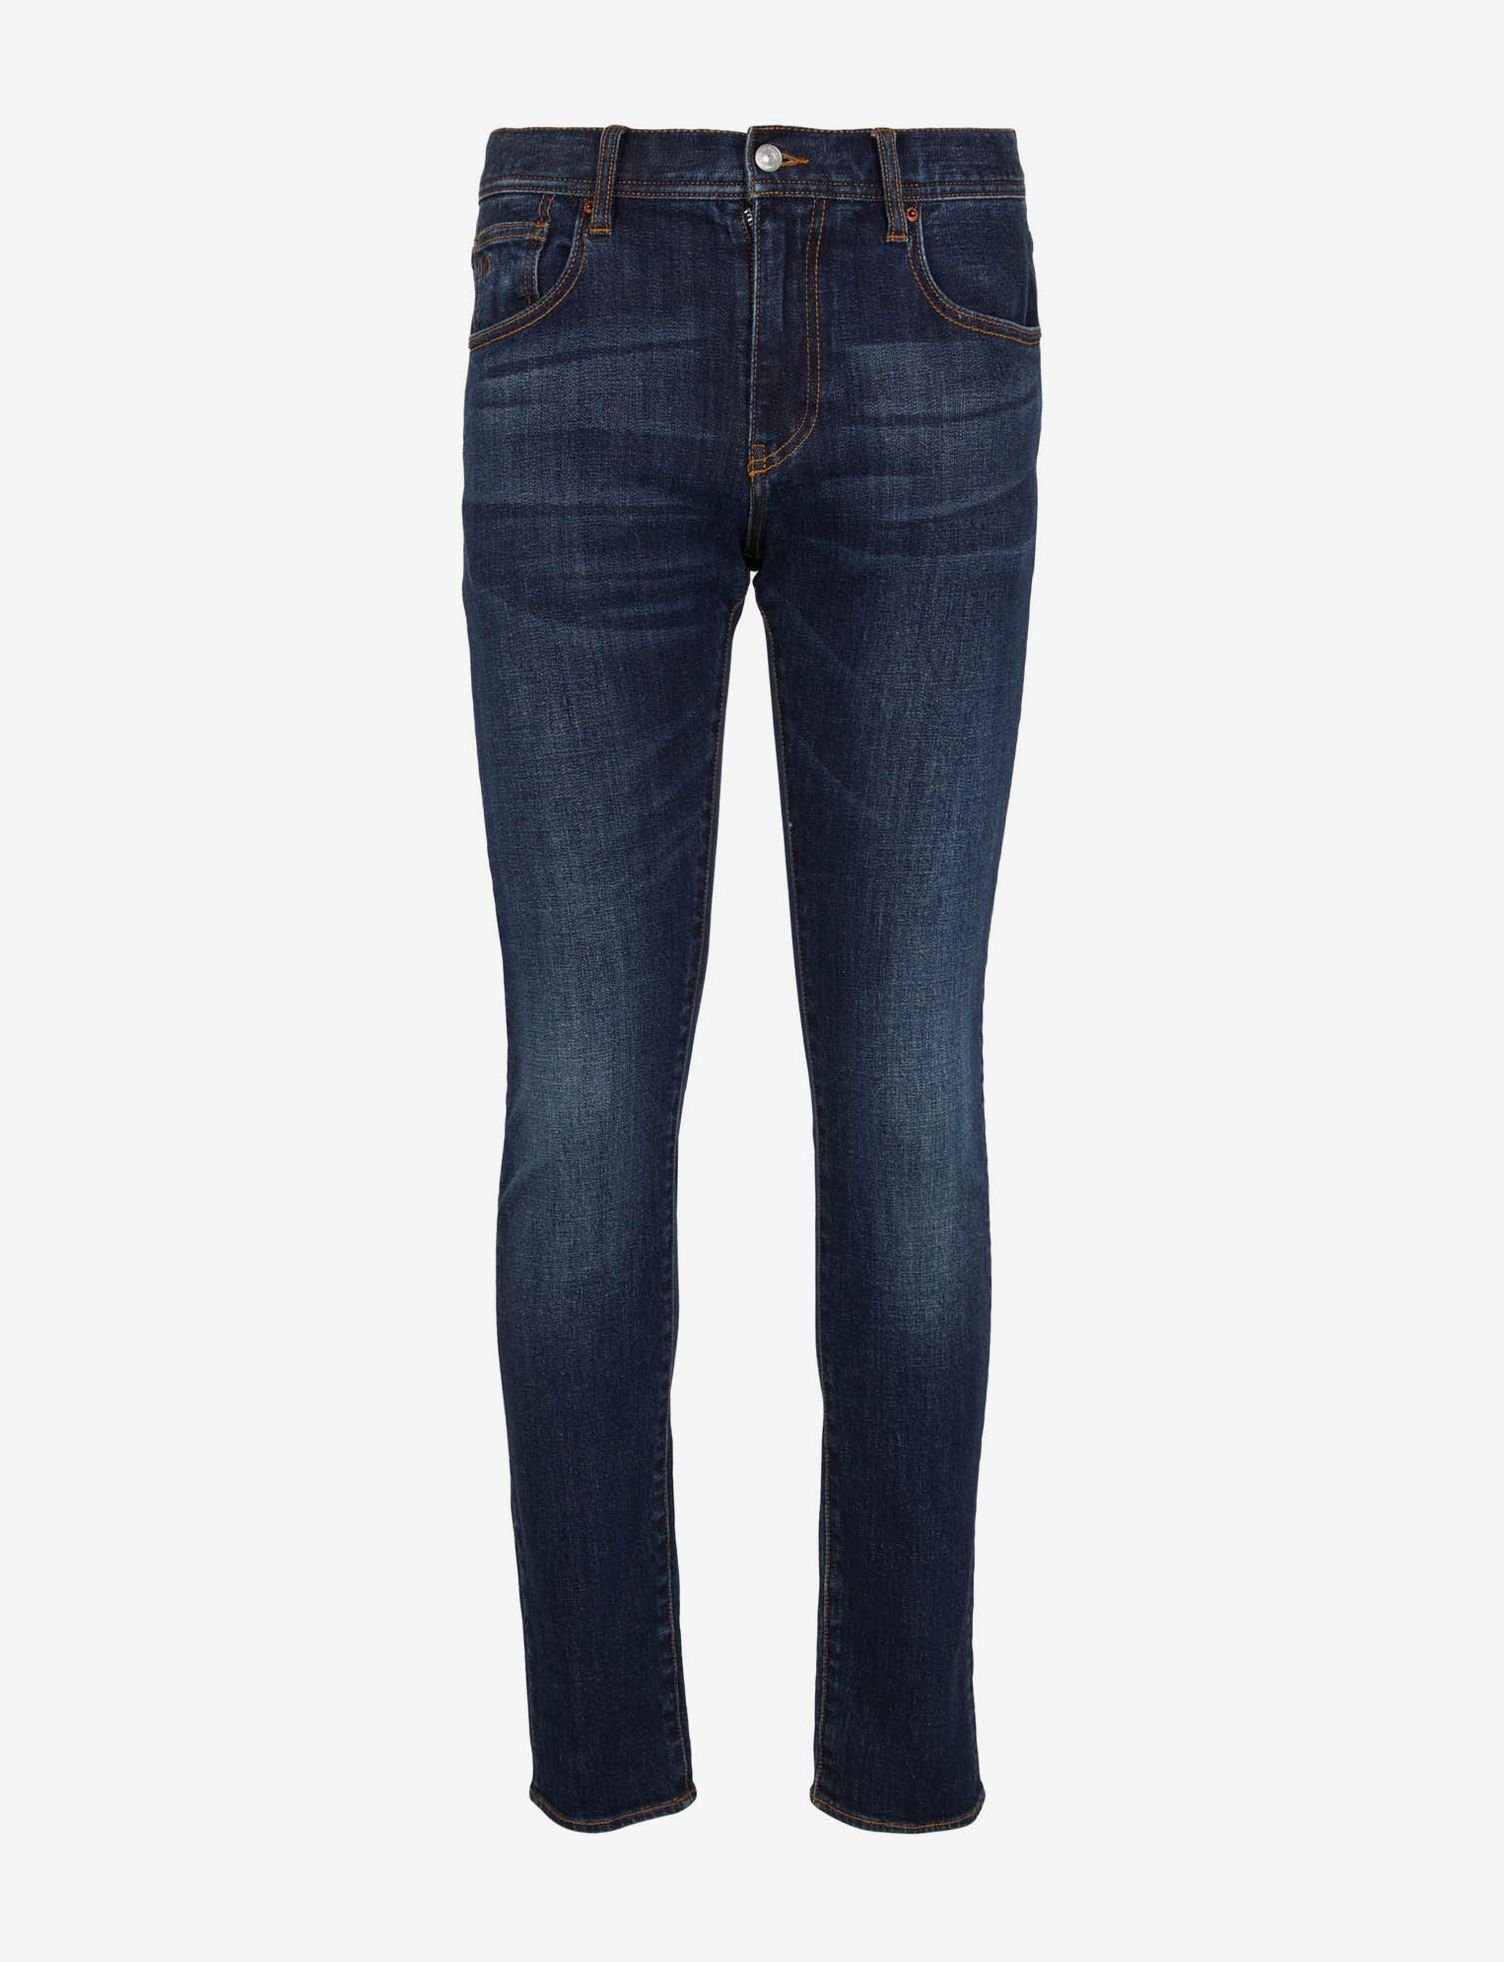 Mavi Matt Classic Men's Straight Leg Jeans, Mid-Rise Relaxed Fit Jeans for  Men, Dark Stanford, Dark Wash Blue Jeans, 29 x 30 at  Men's Clothing  store